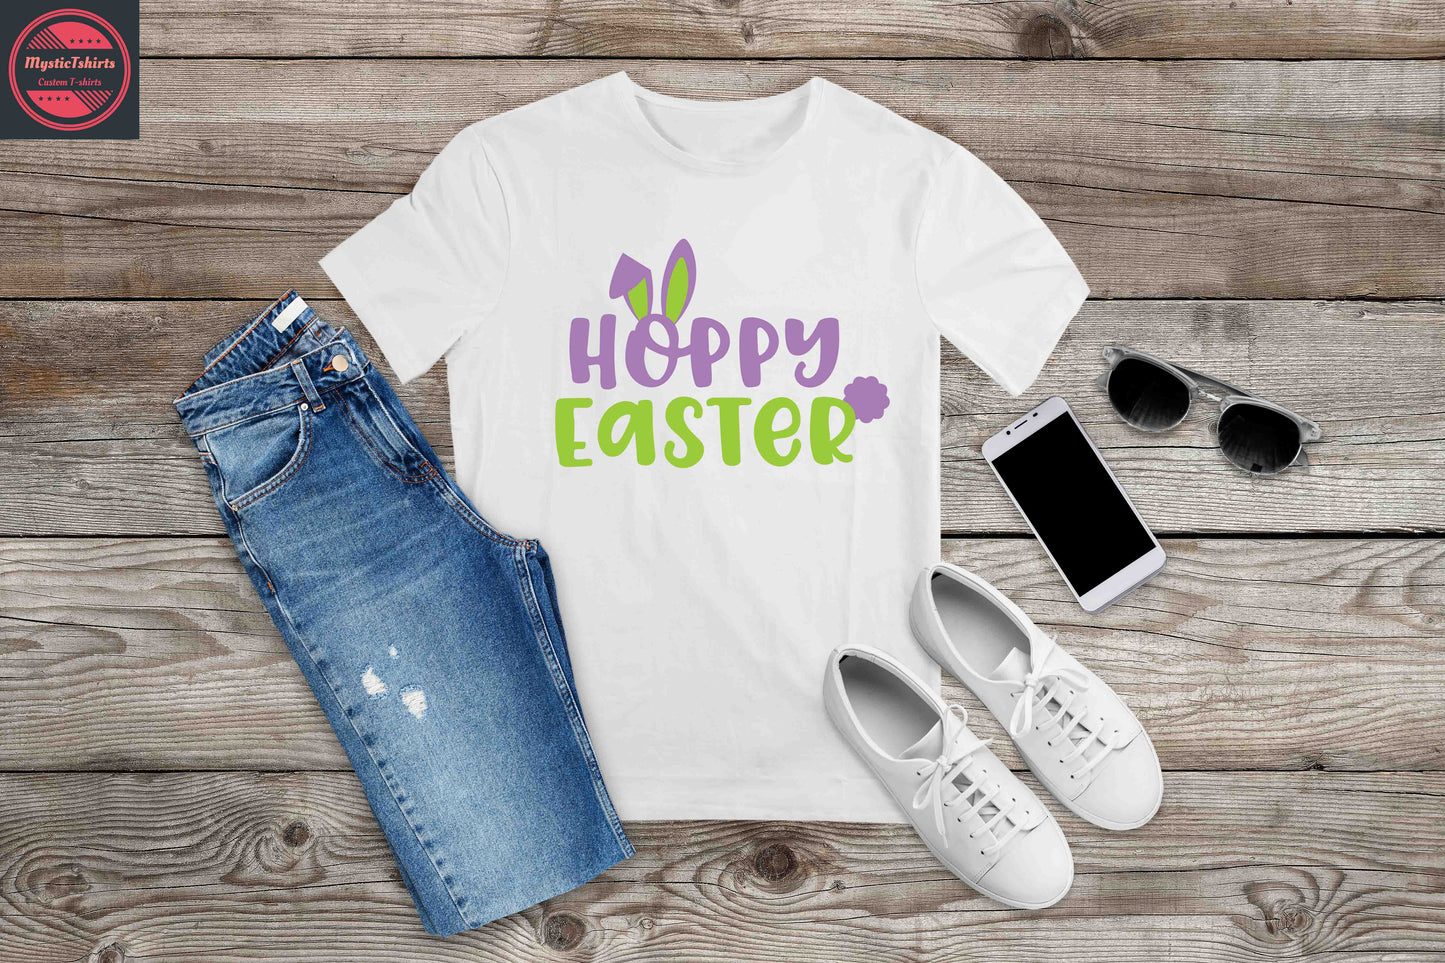 198. HOPPY EASTER, Custom Made Shirt, Personalized T-Shirt, Custom Text, Make Your Own Shirt, Custom Tee